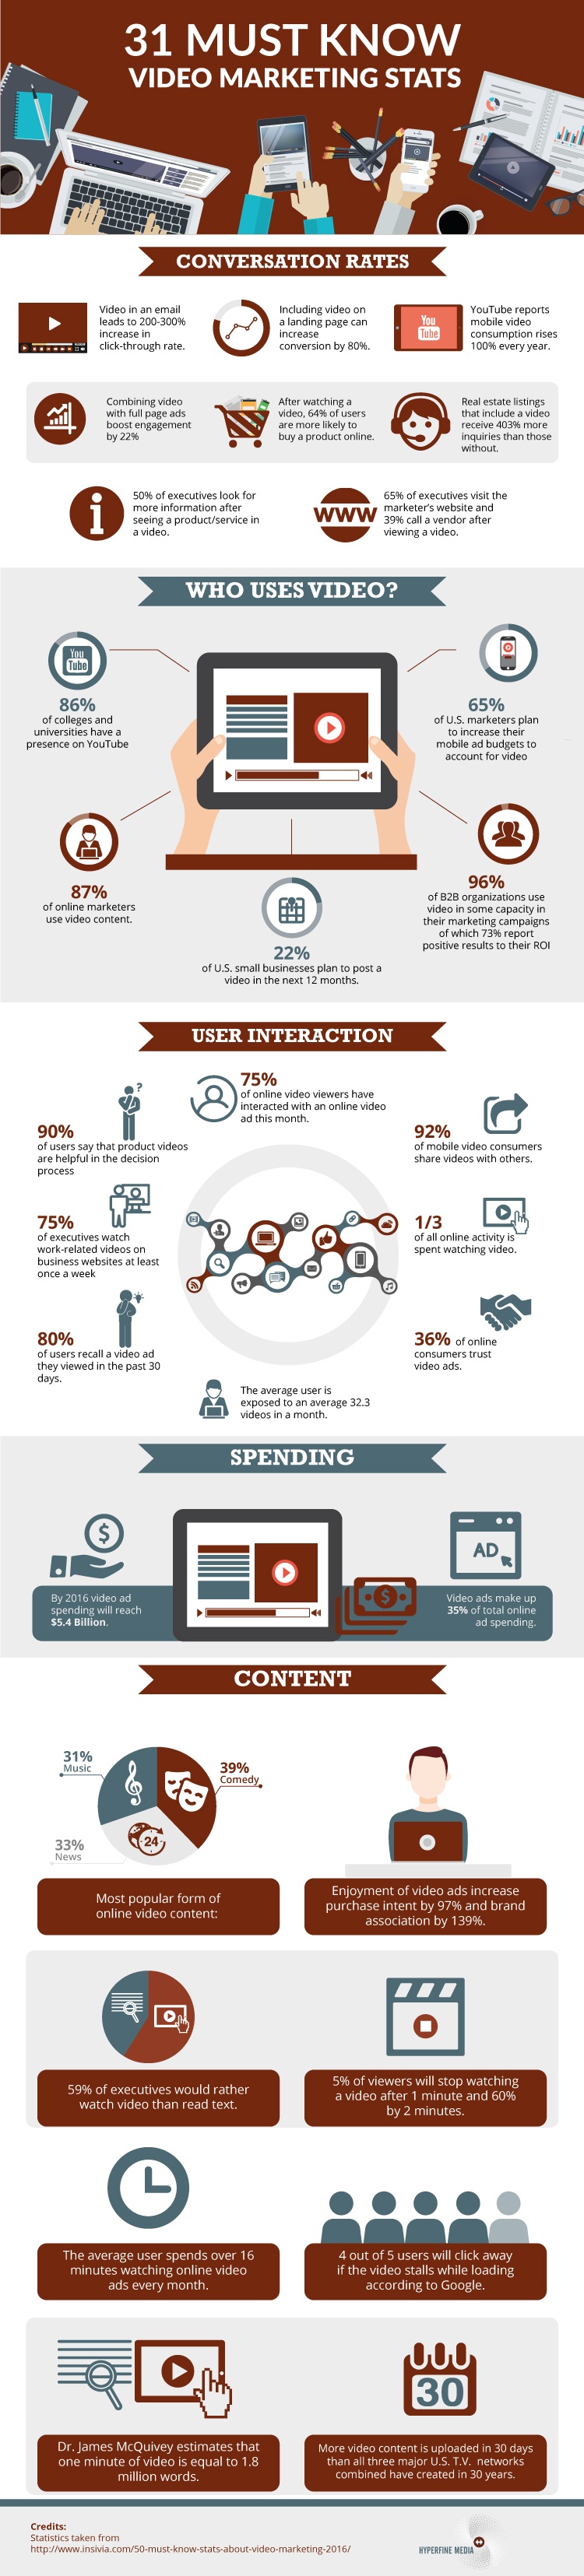 video-marketing-statistics-infographic